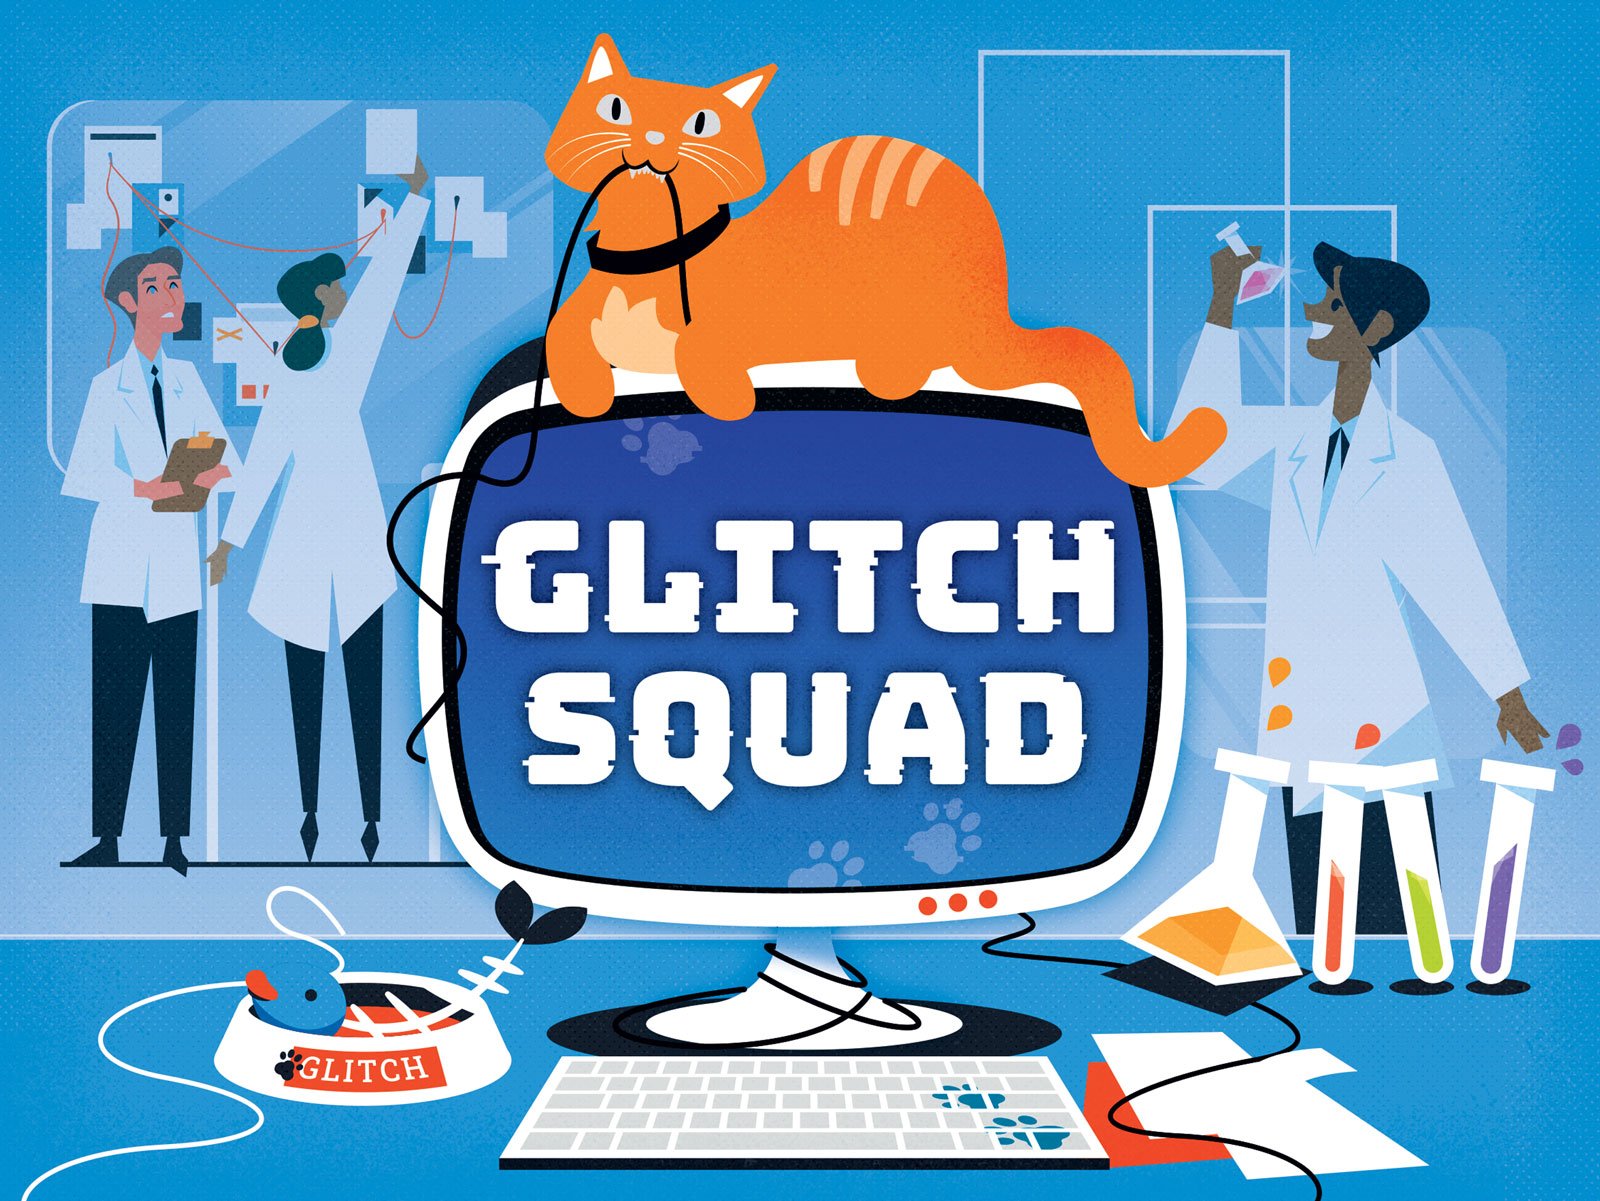 Glitch Squad - The Fourth Place